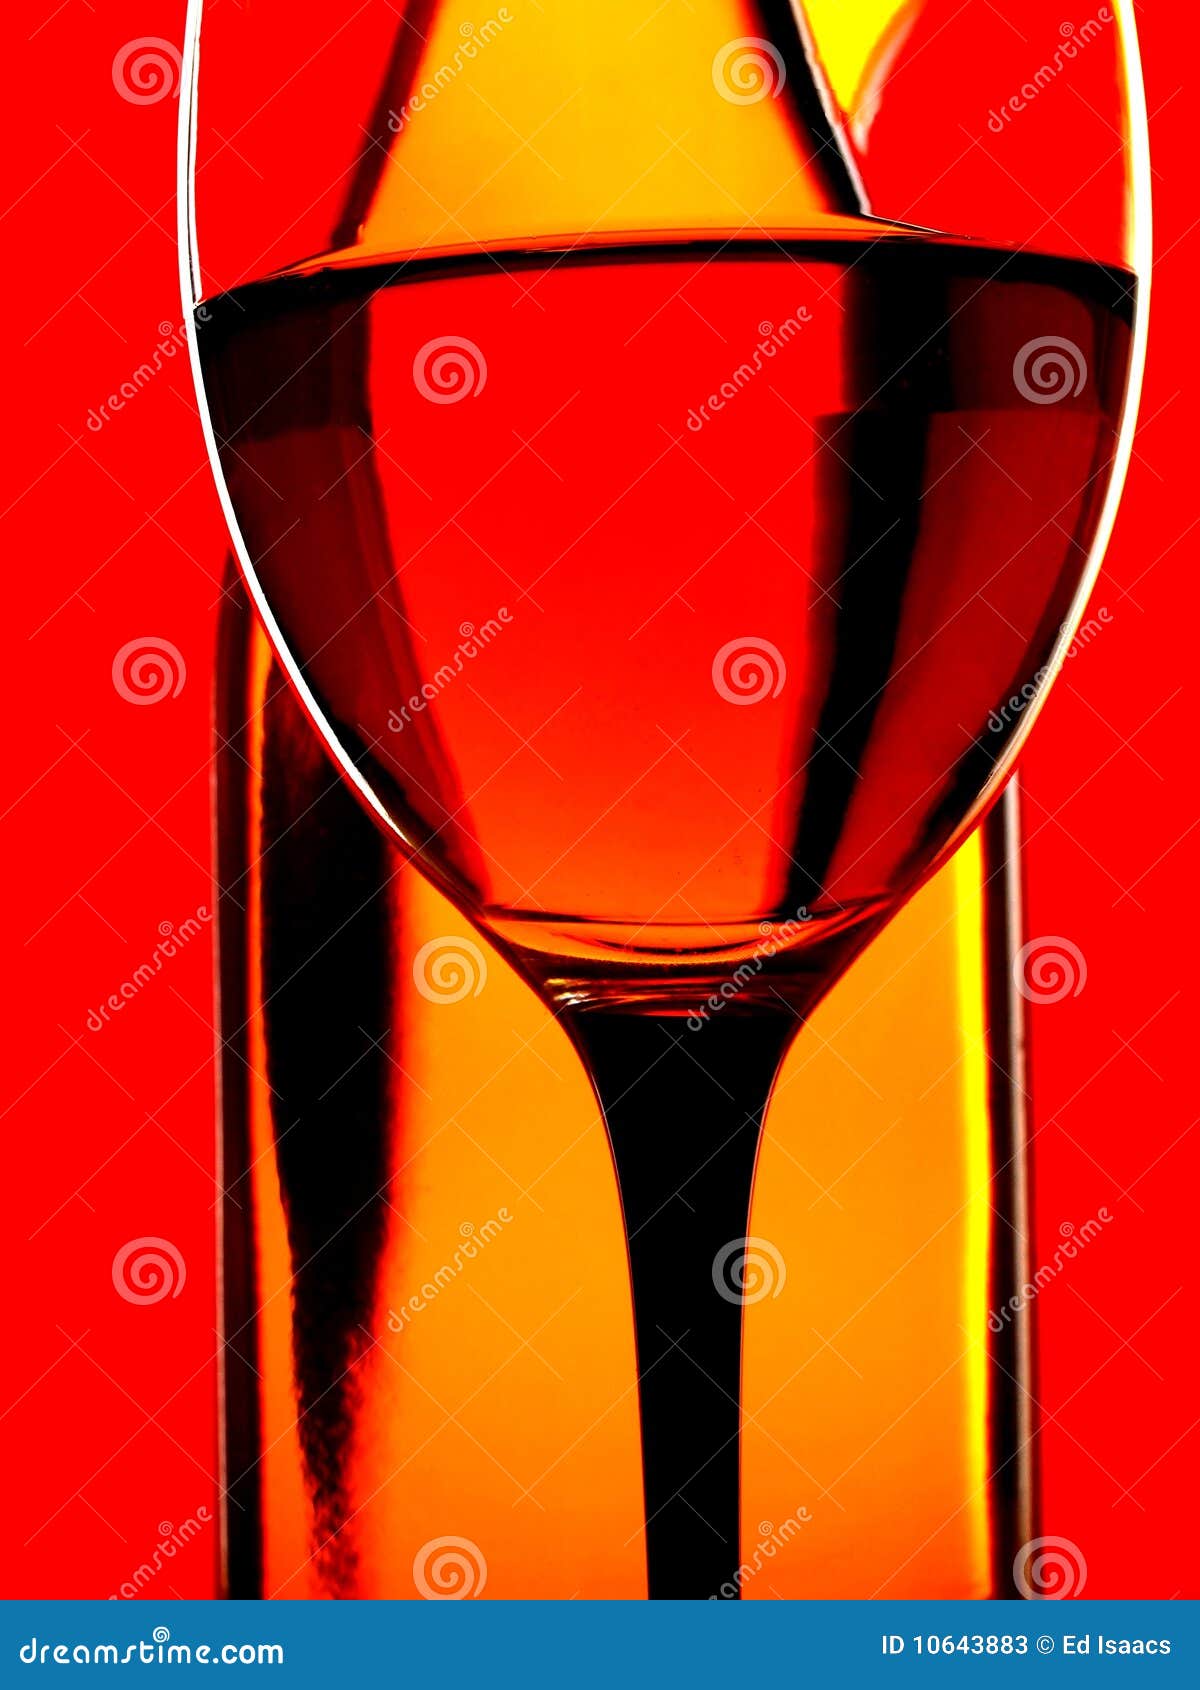 wine bottles & glass background